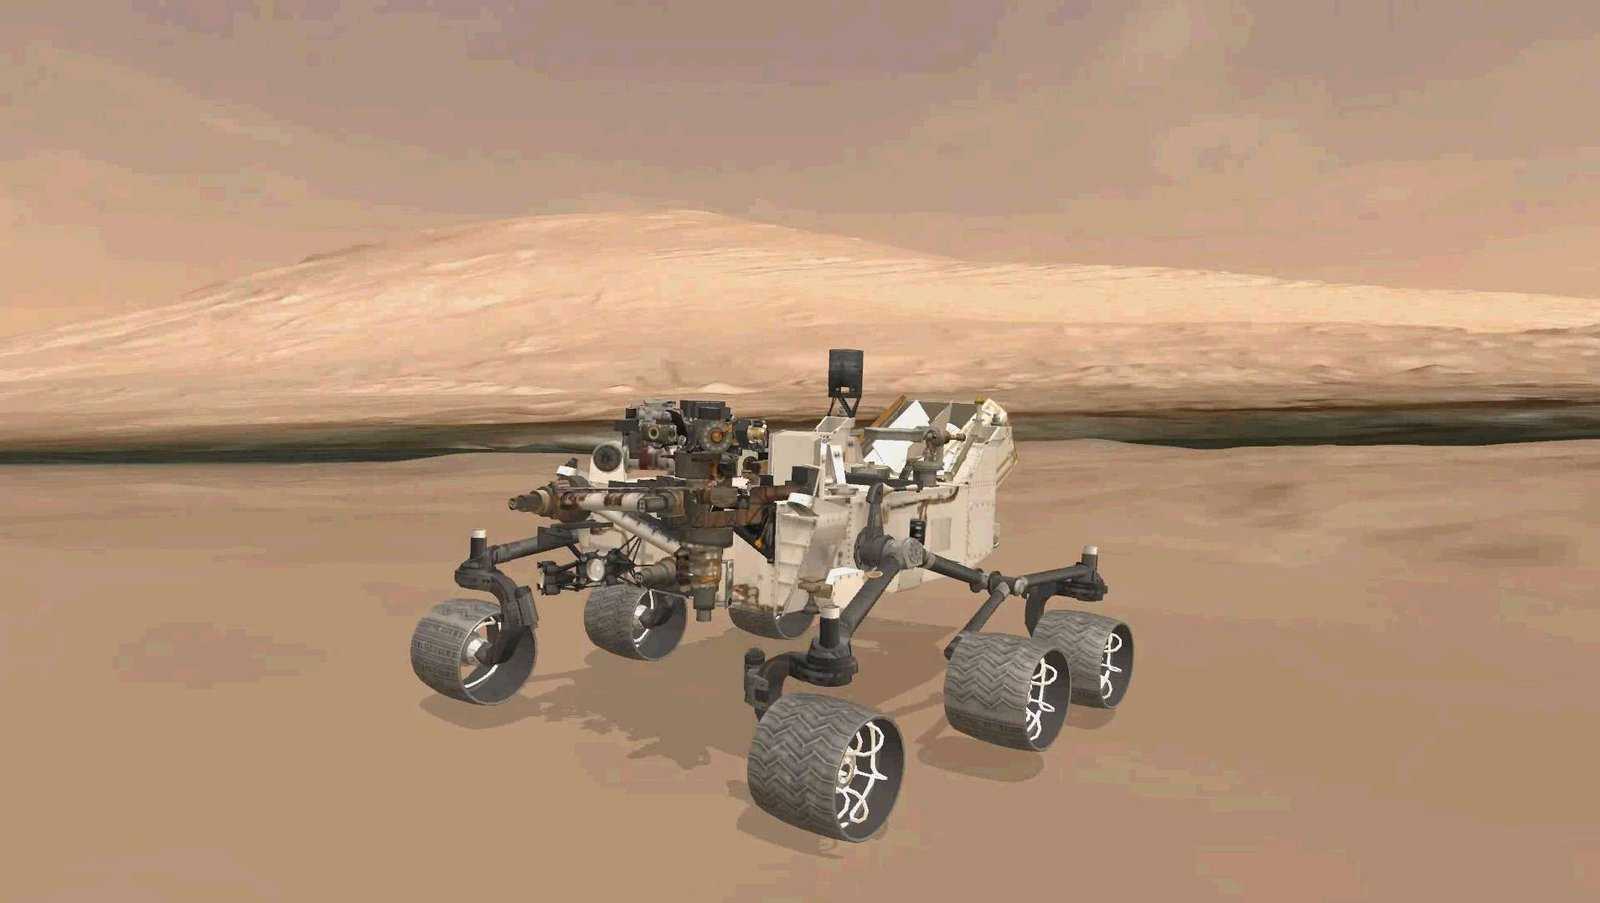 Rover Curiosity Mars NASA Capai Area Misterius yang Menjanjikan